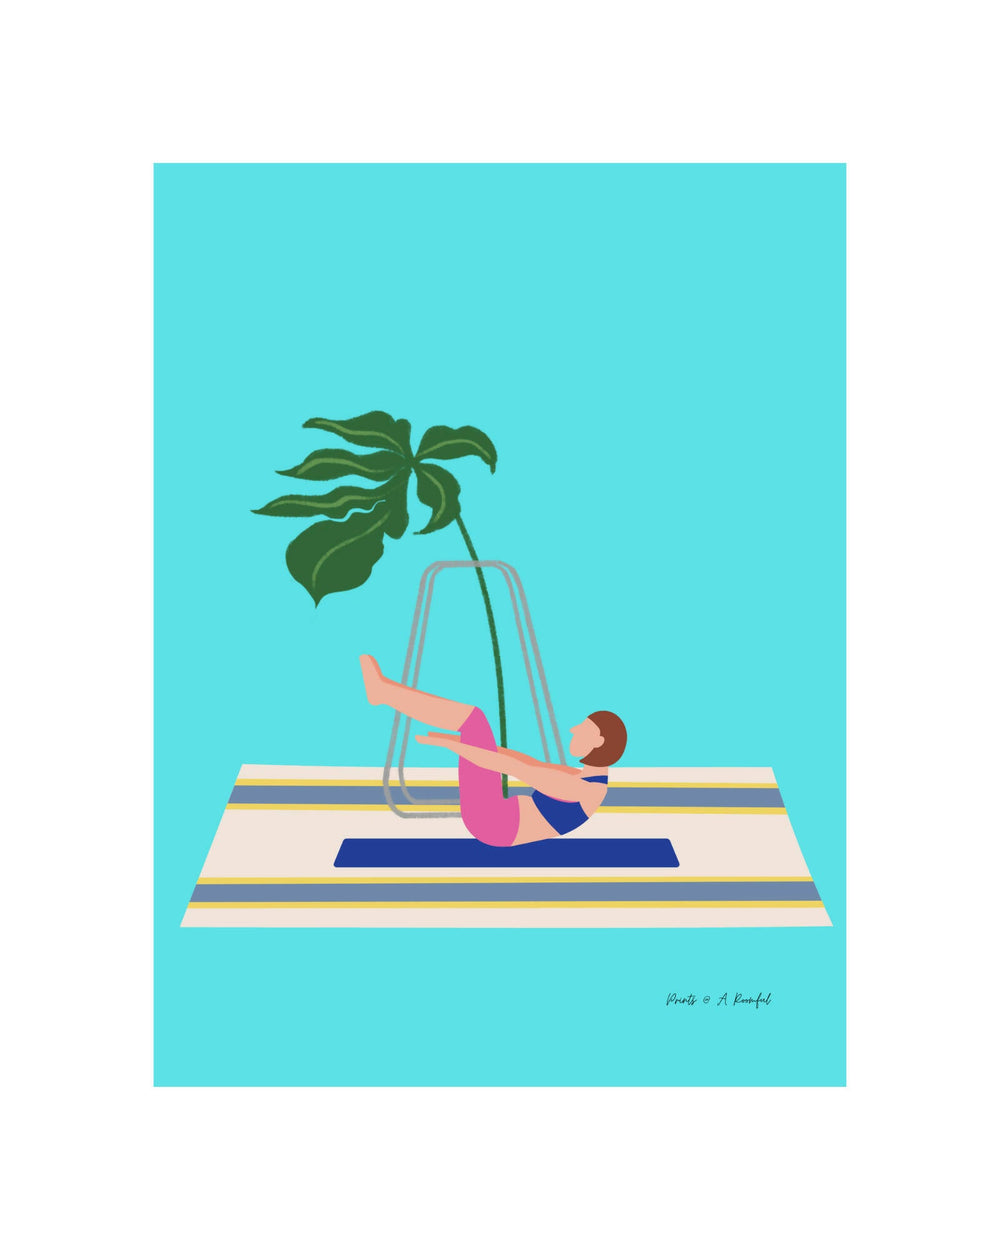 wall art : my yoga avatar (turquoise background) Art Prints@ARoomful 